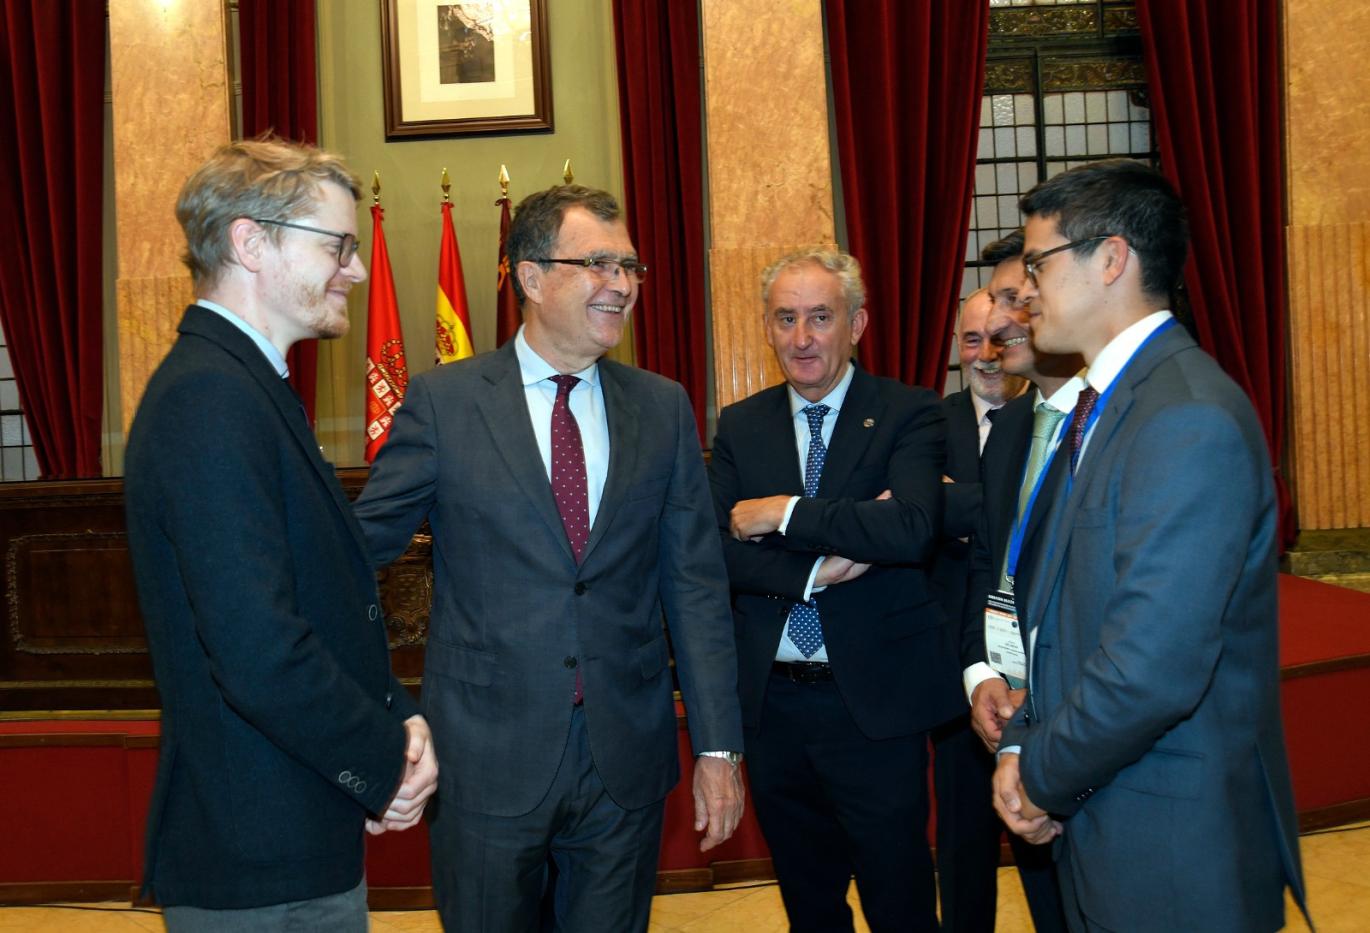 European Medical Organisations' Leaderships Welcomed at Murcia City Hall symbol image